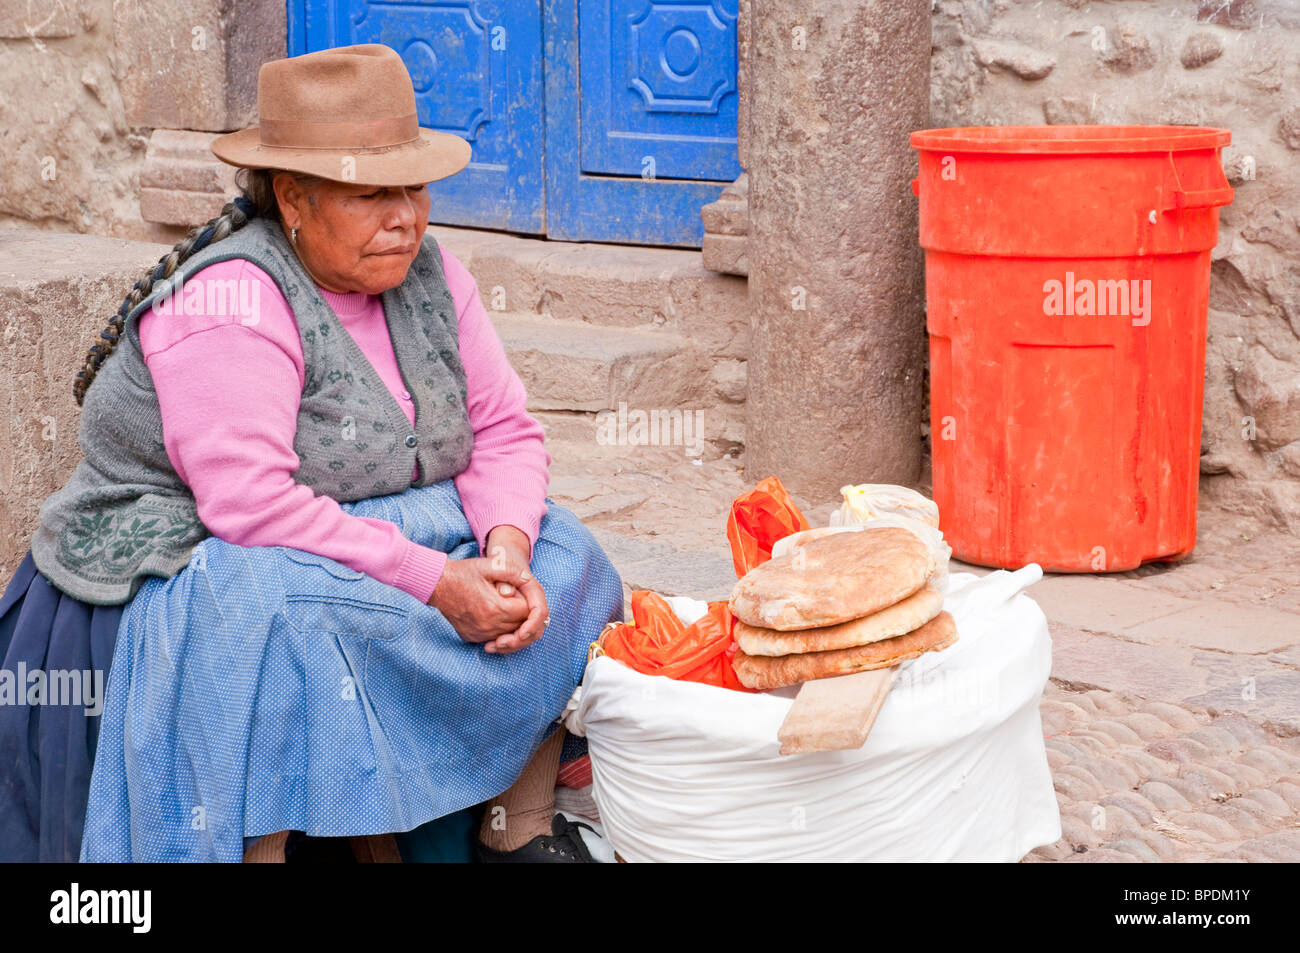 A Peruvian lady in traditional dress at the Pisac market, Urubamba Valley, Peru, South America. Stock Photo